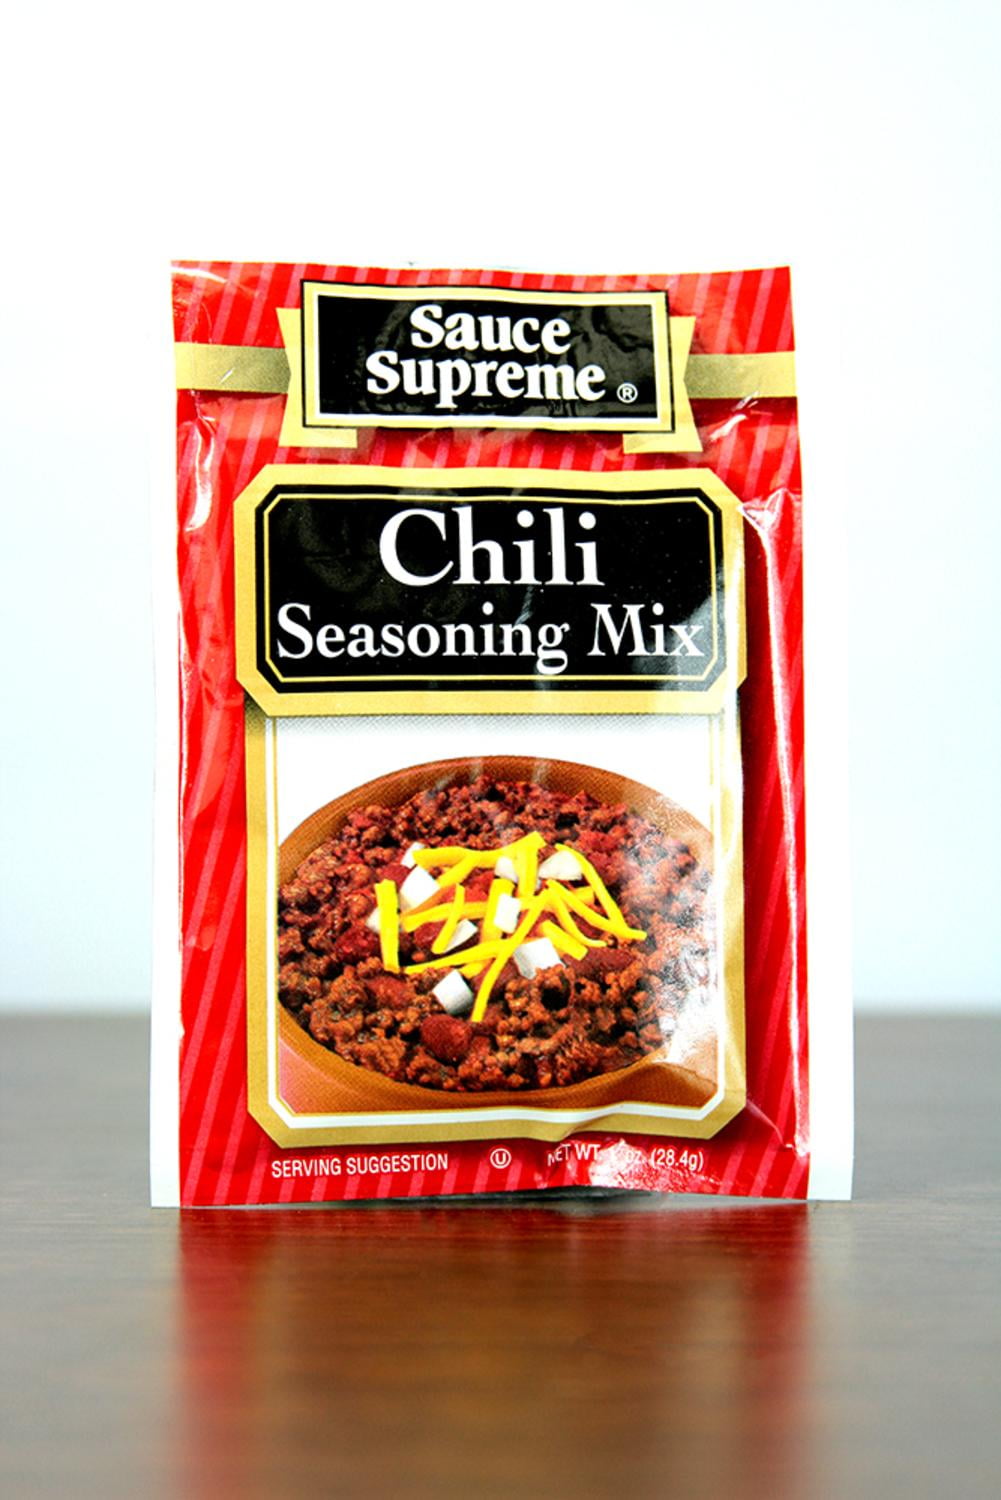 Pack of 12 Spice Supreme Chitterling Seasonings 2.75 oz. #38052